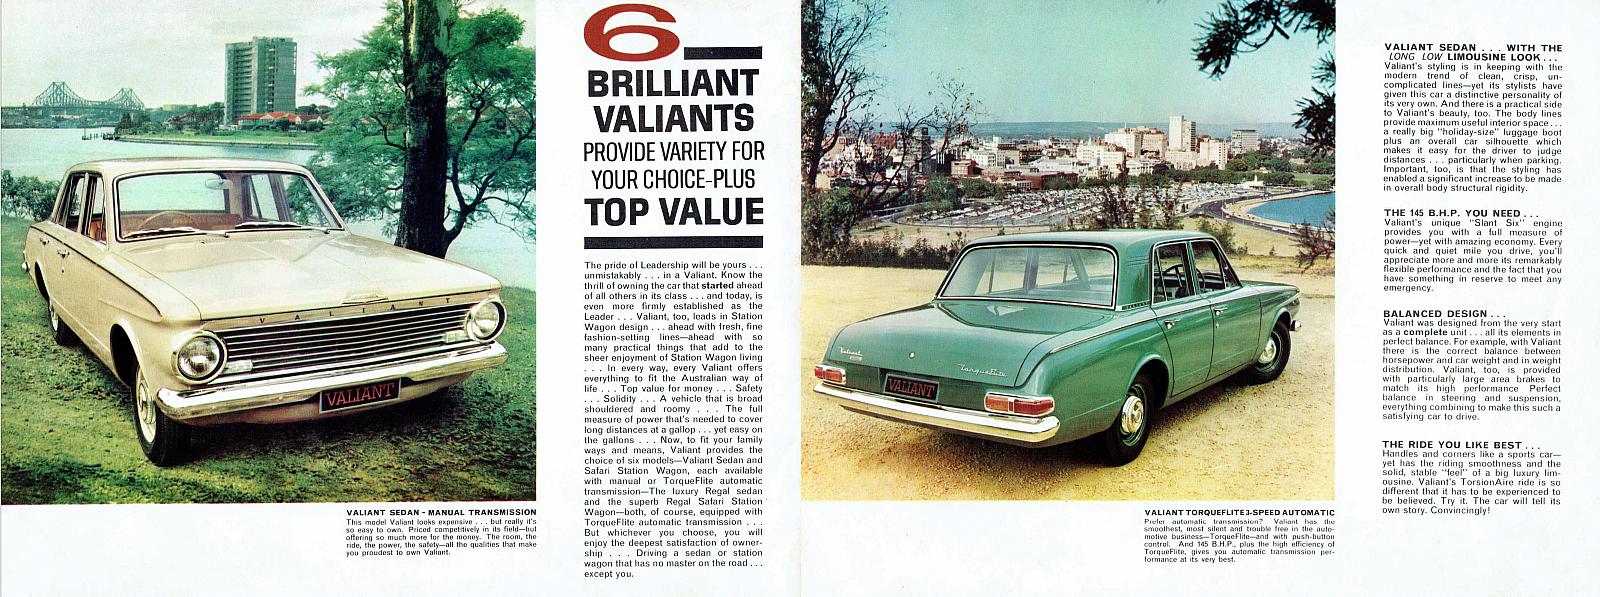 1963 Chrysler AP5 Valiant Brochure Page 3